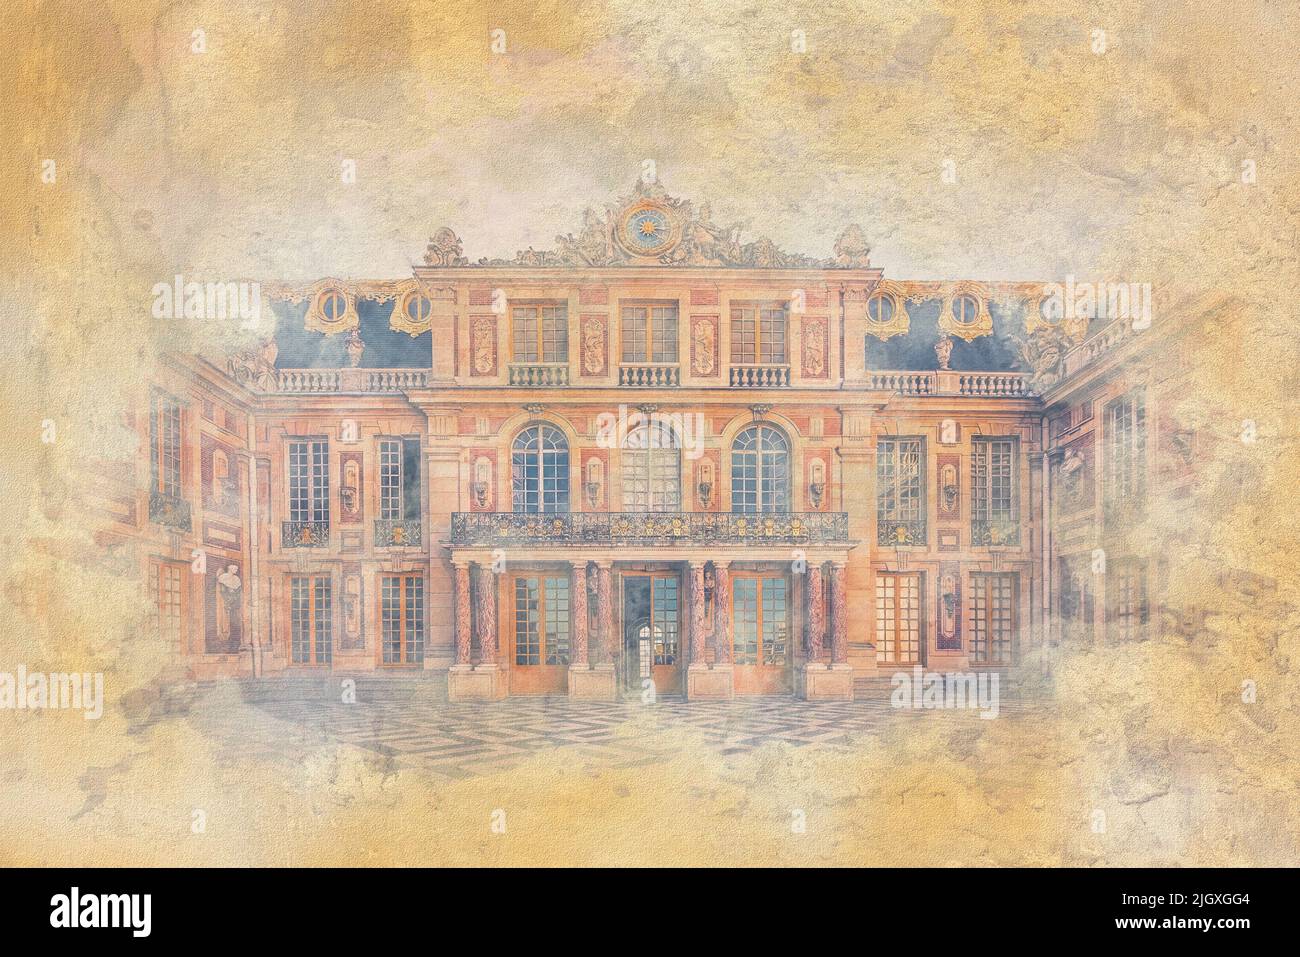 Versailles Palace facade - Watercolor effect illustration Stock Photo